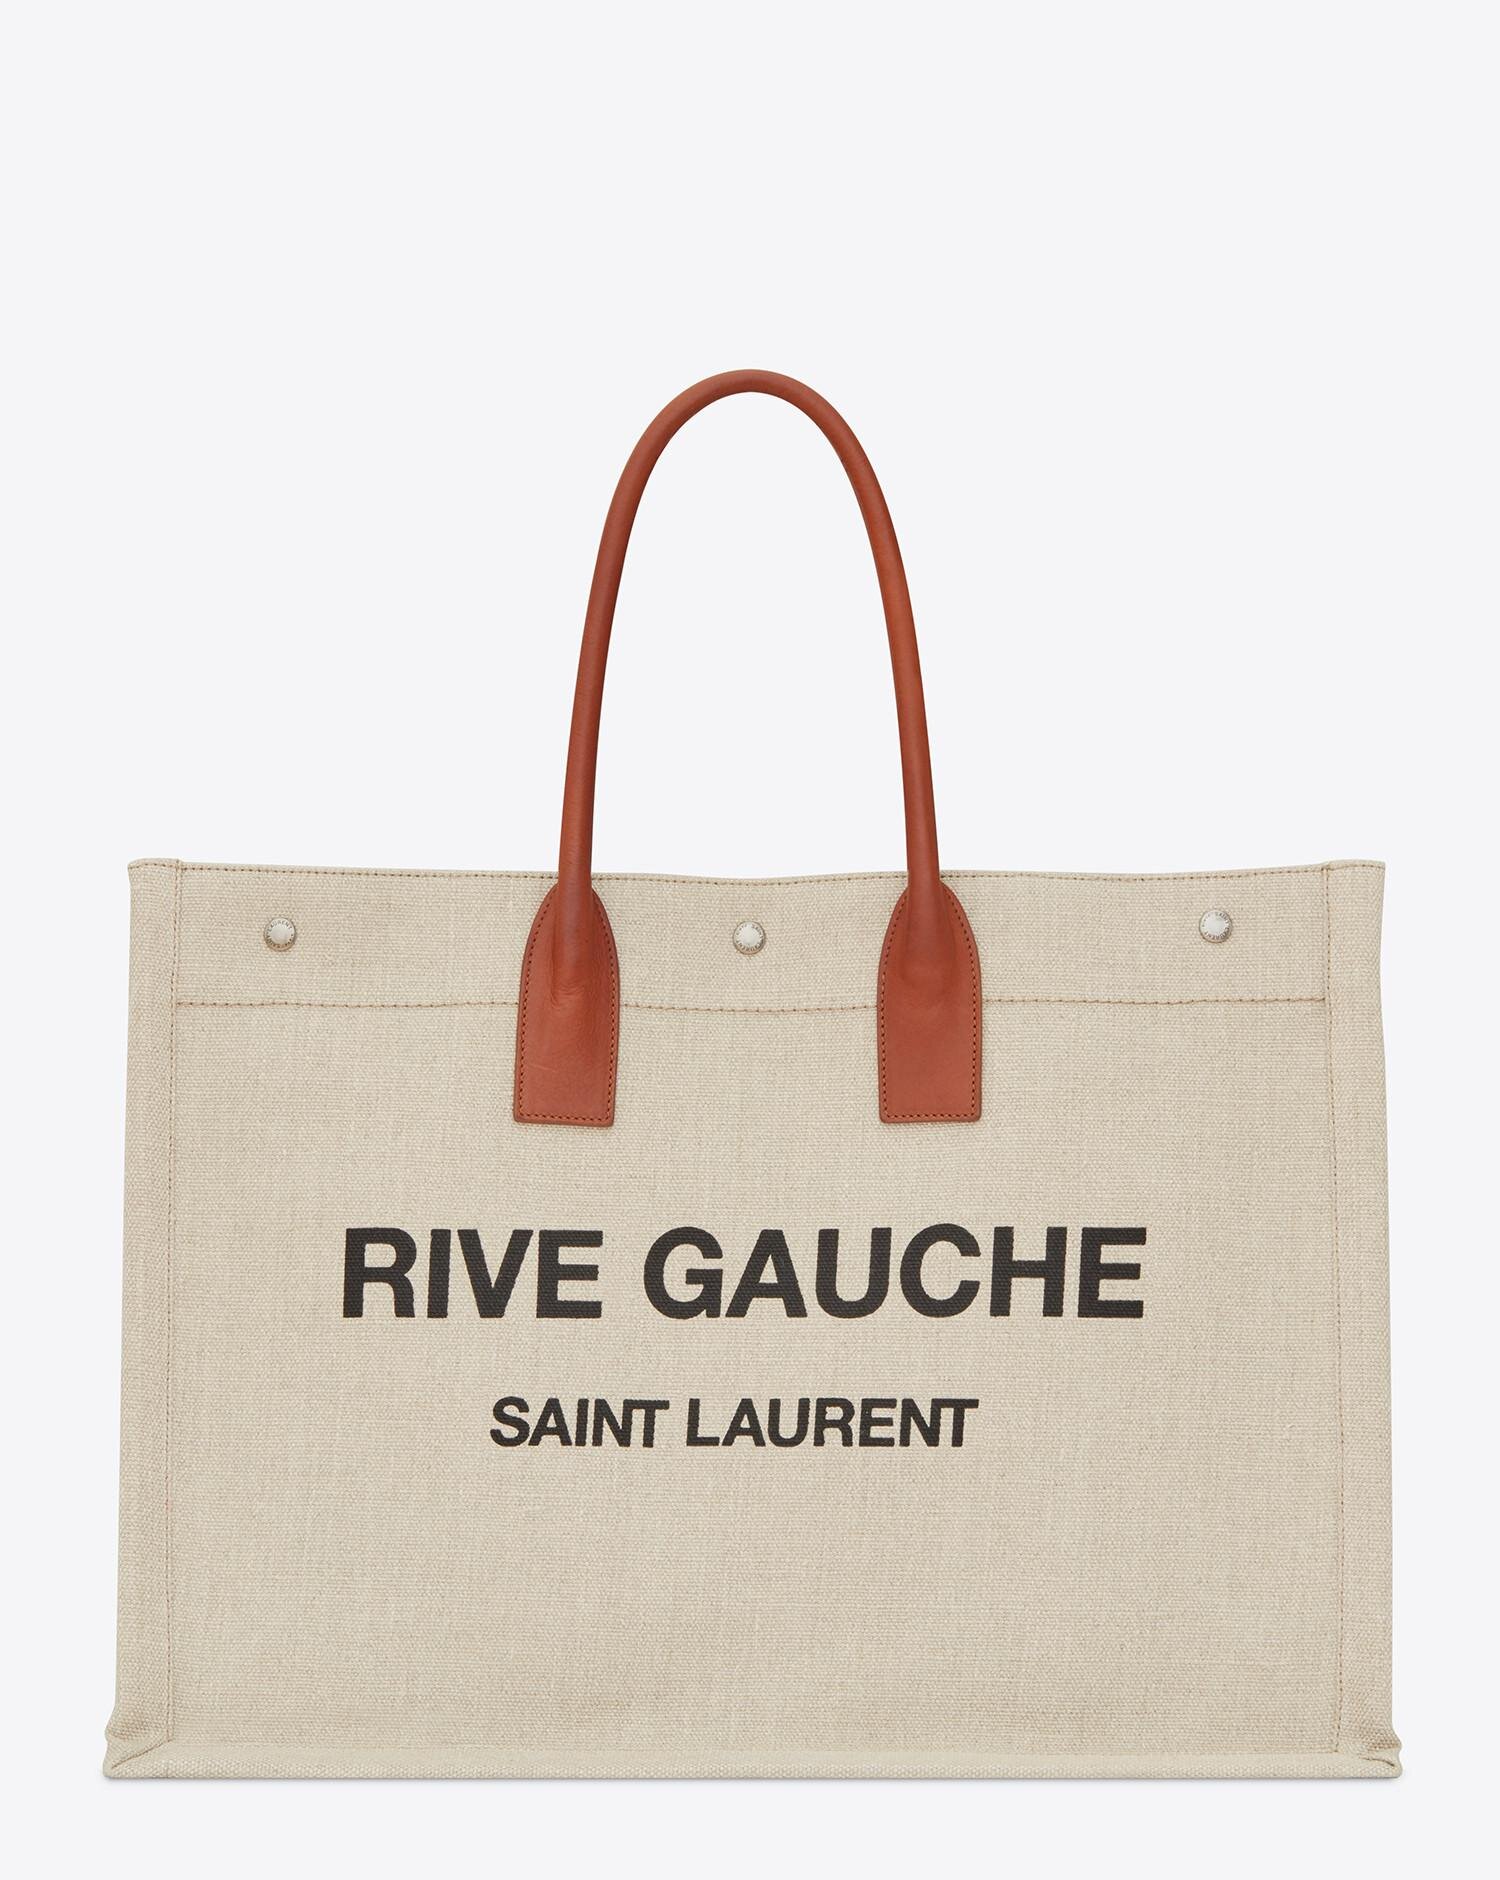 Saint Laurent Rive Gauche Tote Bag in Beige Linen and Cognac Leather.jpg